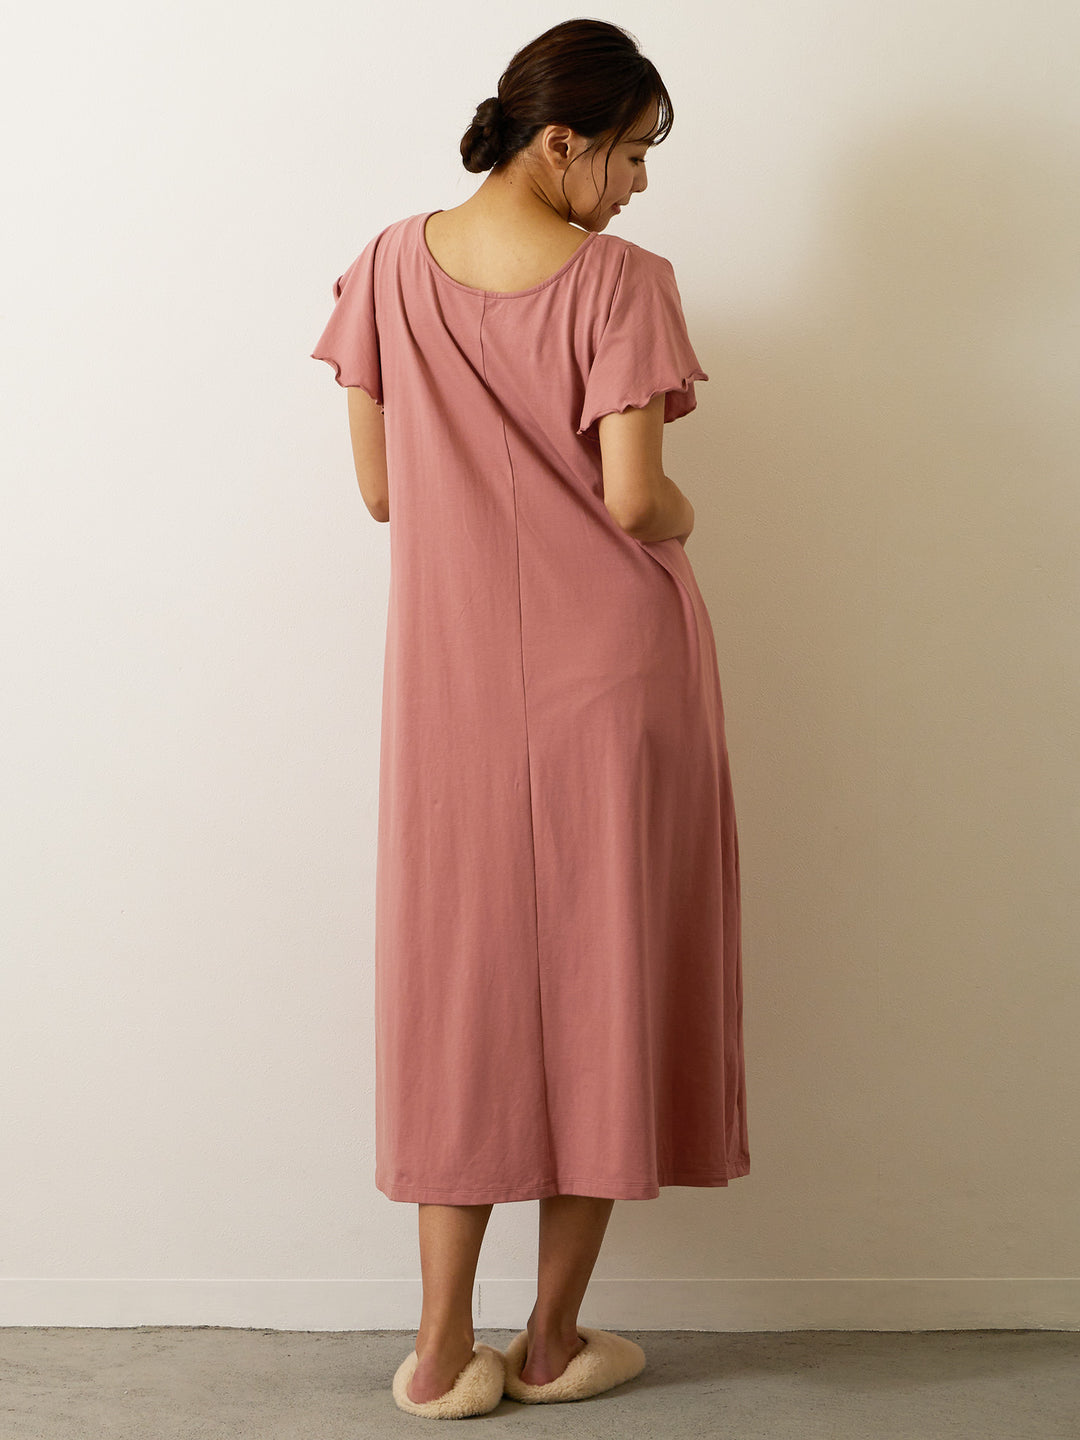 [Maternity/nursing clothes] Room dress Pink